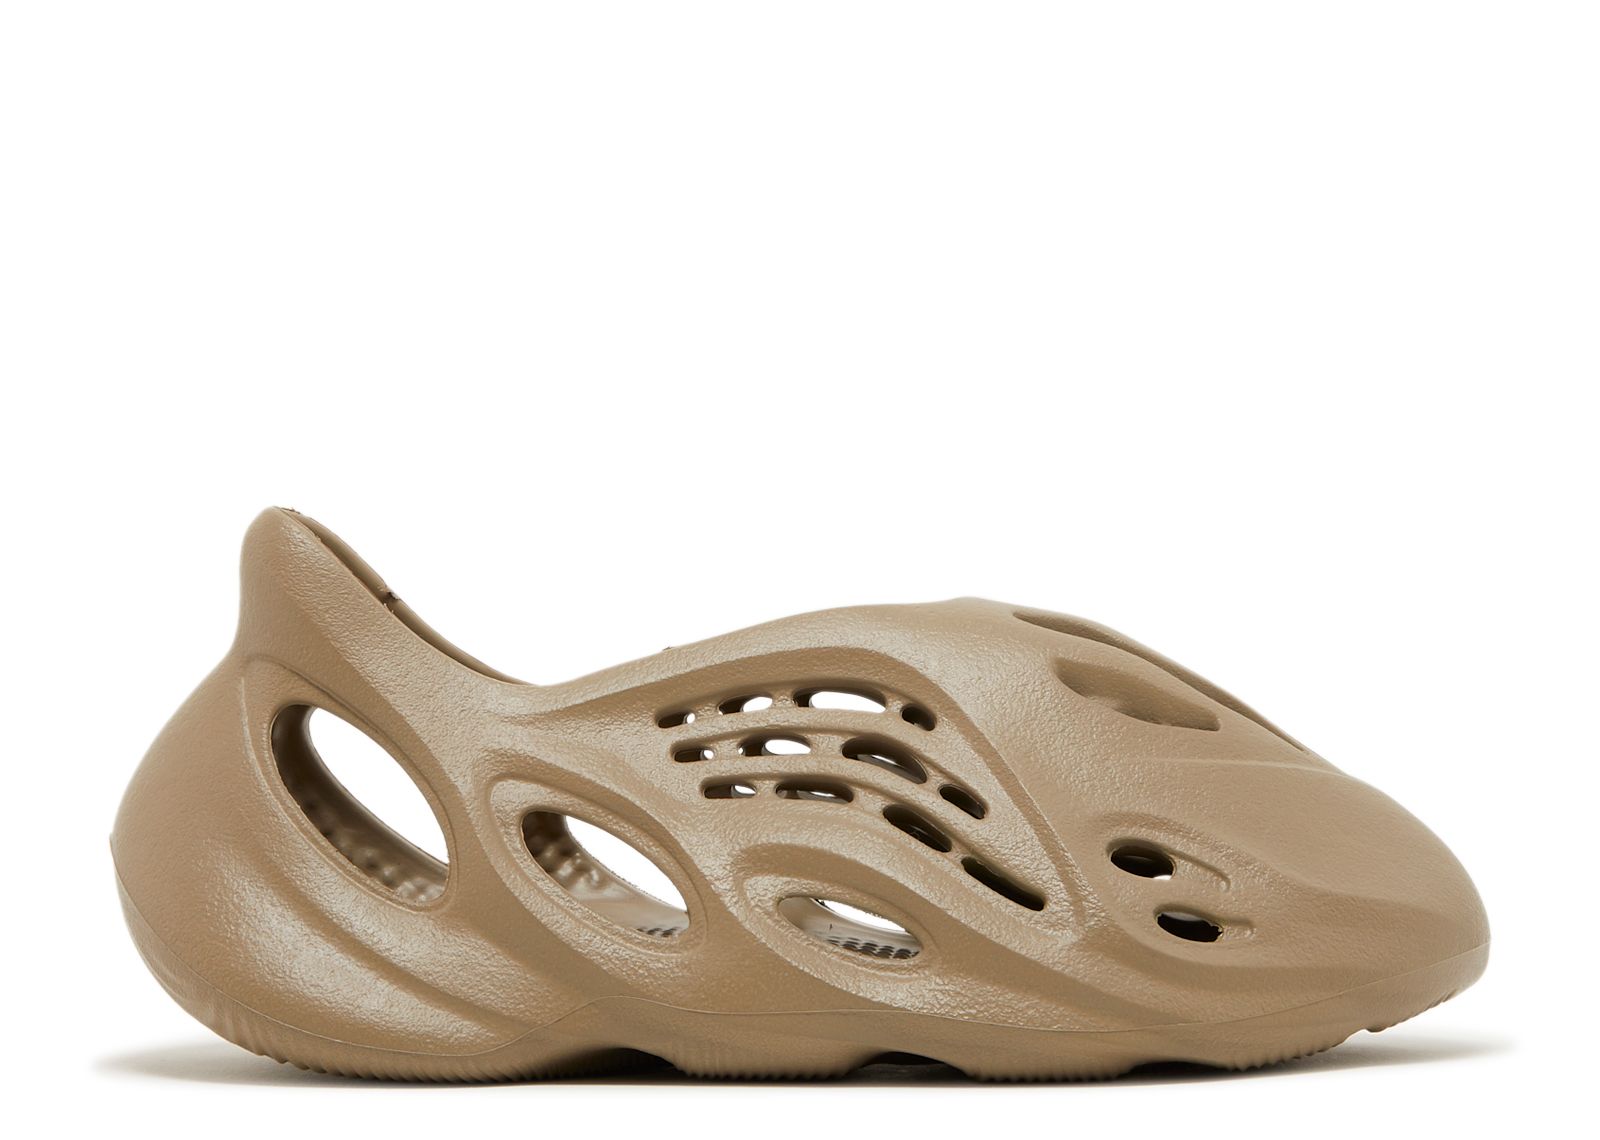 Yeezy Foam Runner 'Stone Taupe' - Adidas - ID4752 - stone taupe/stone ...